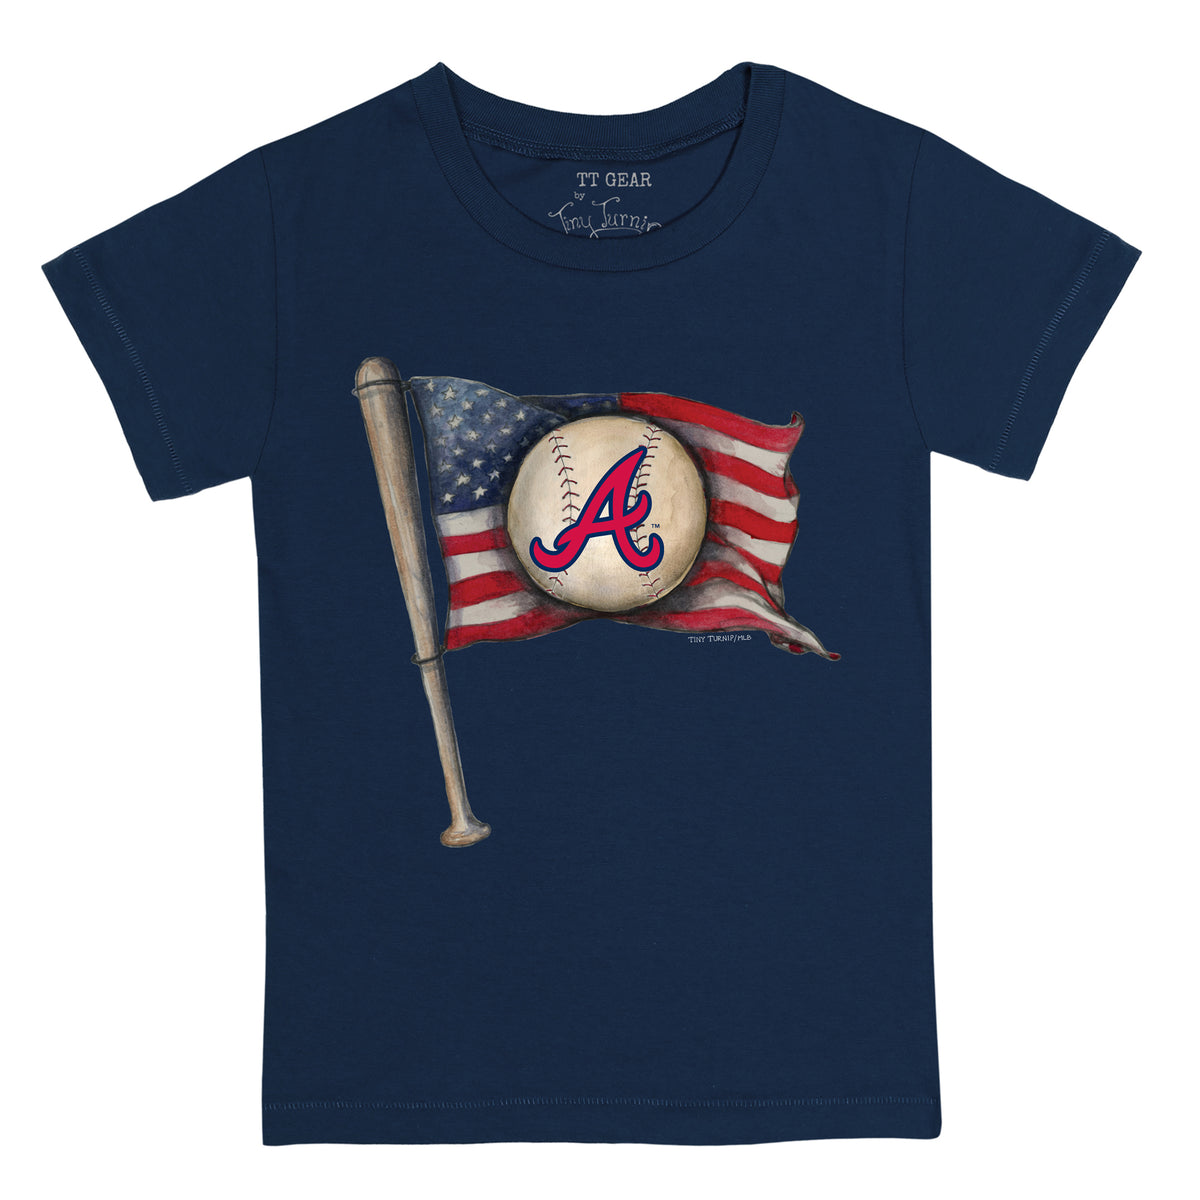 Toddler Tiny Turnip White Atlanta Braves Baseball Bow T-Shirt